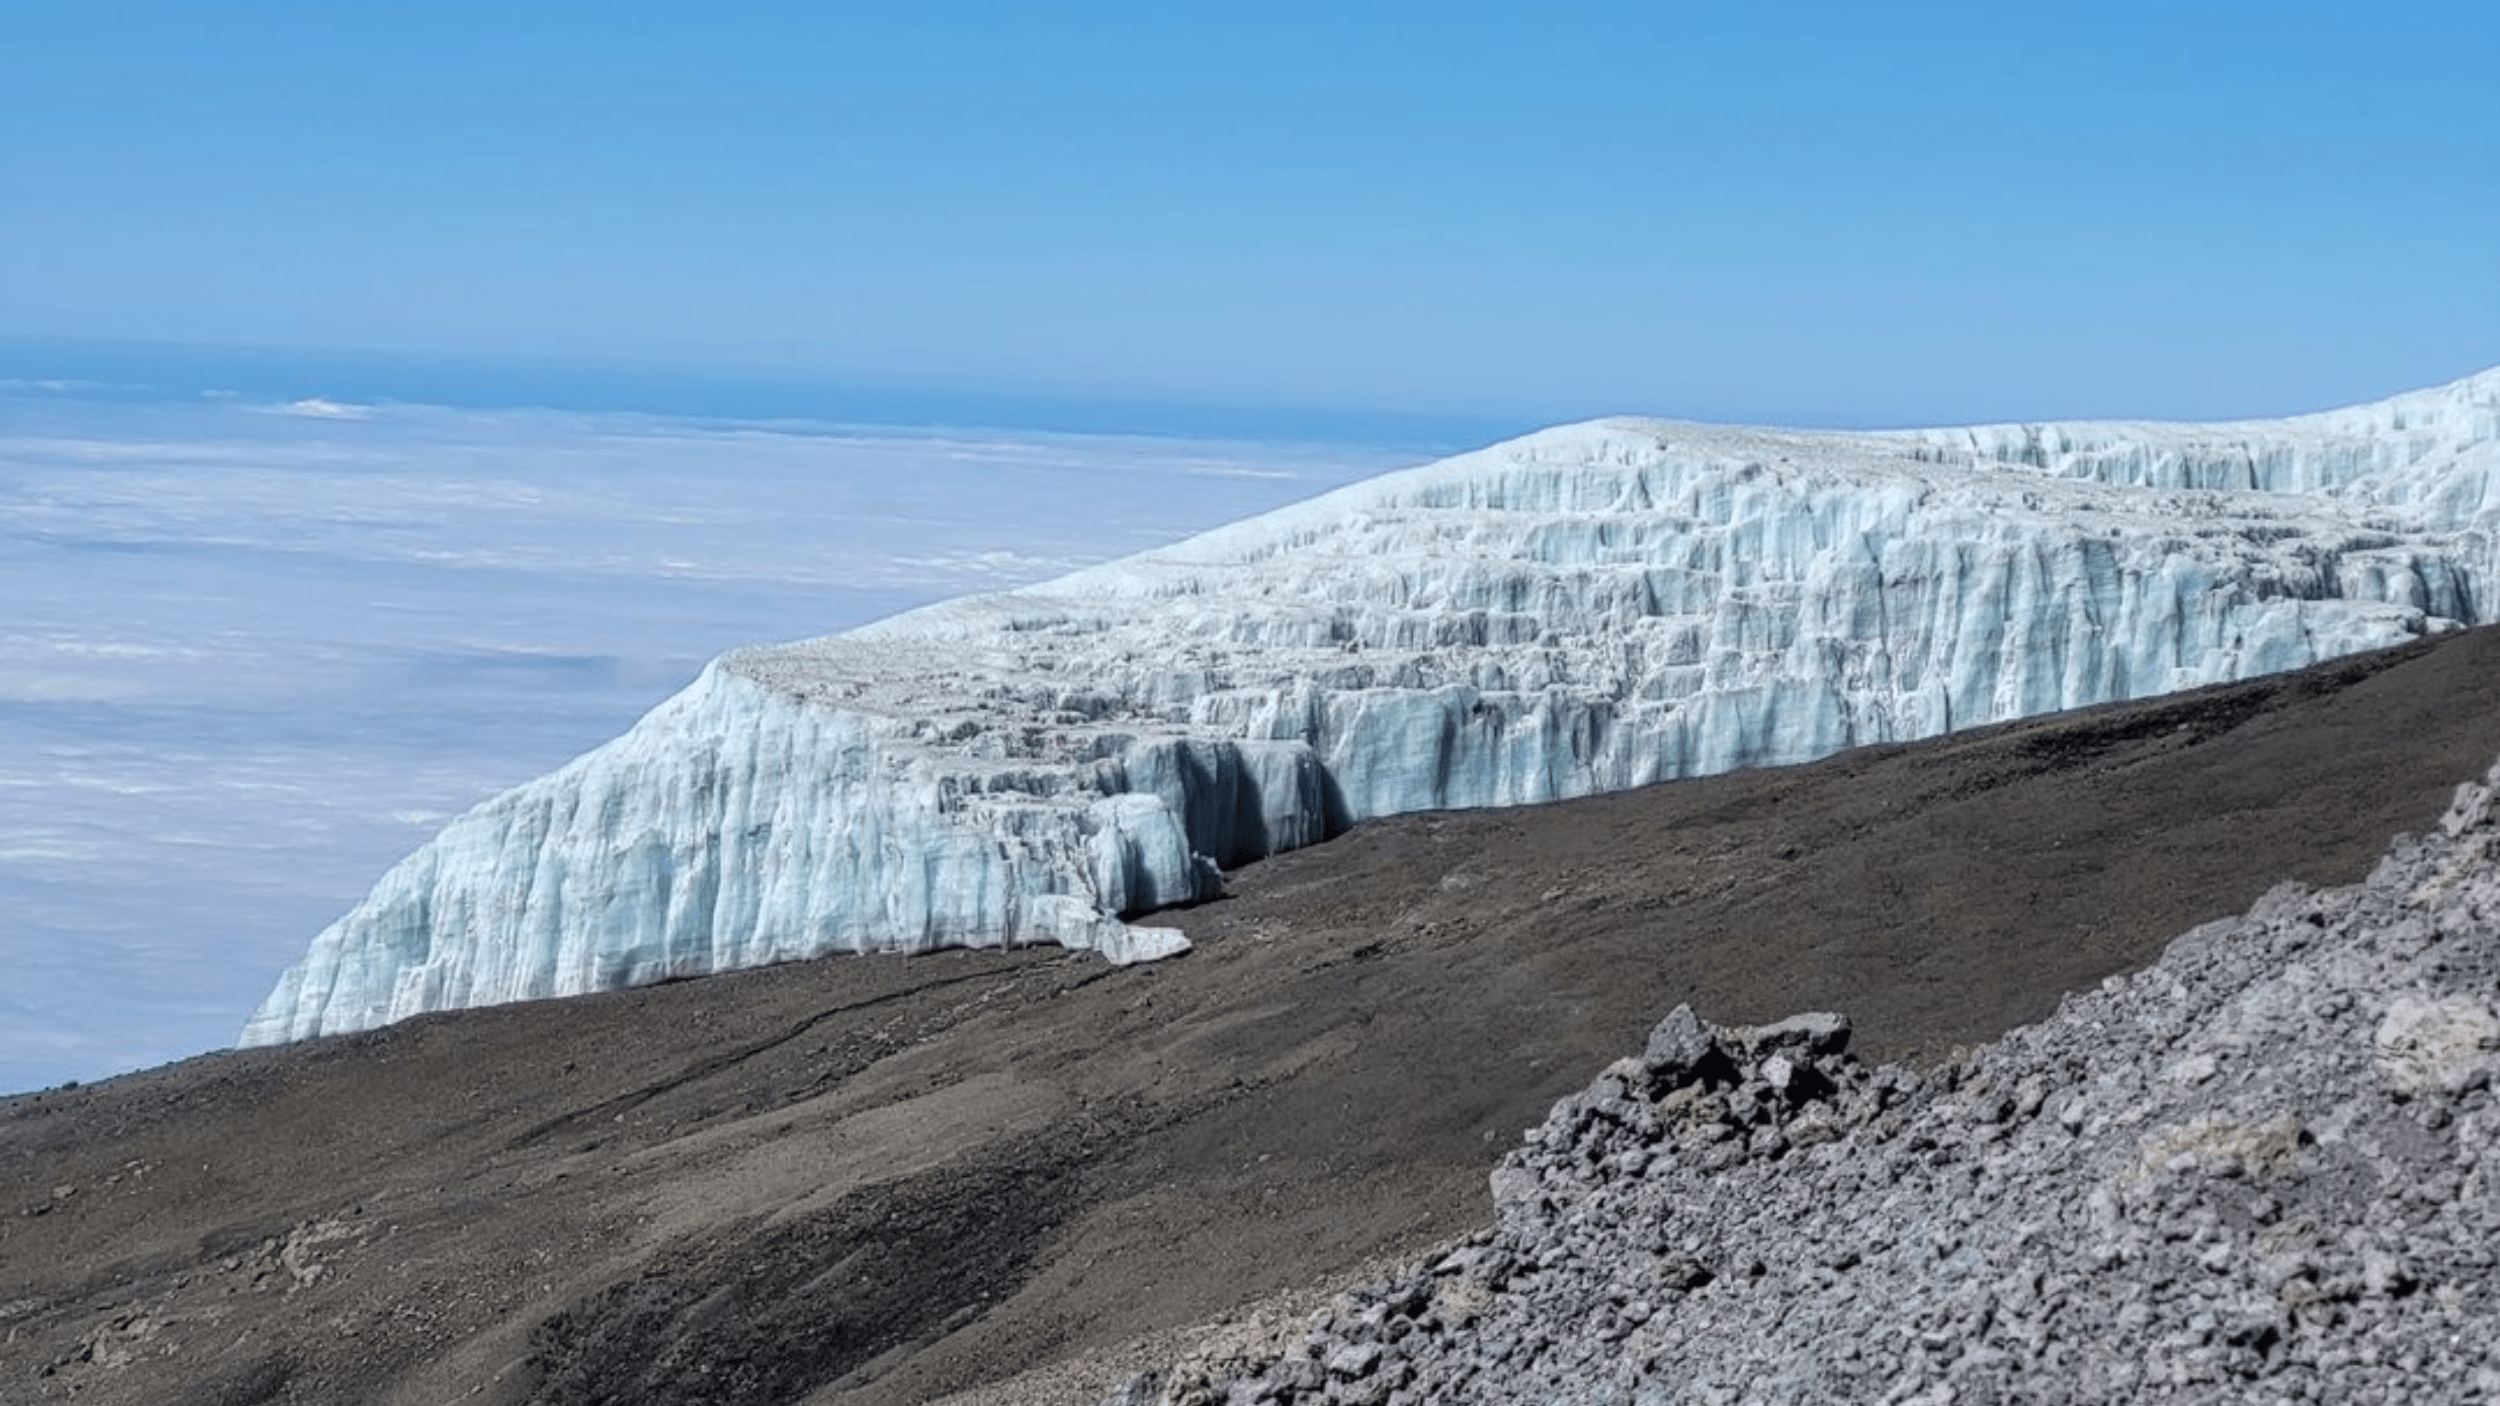 An image of the glacial ice on Kilimanjaro.